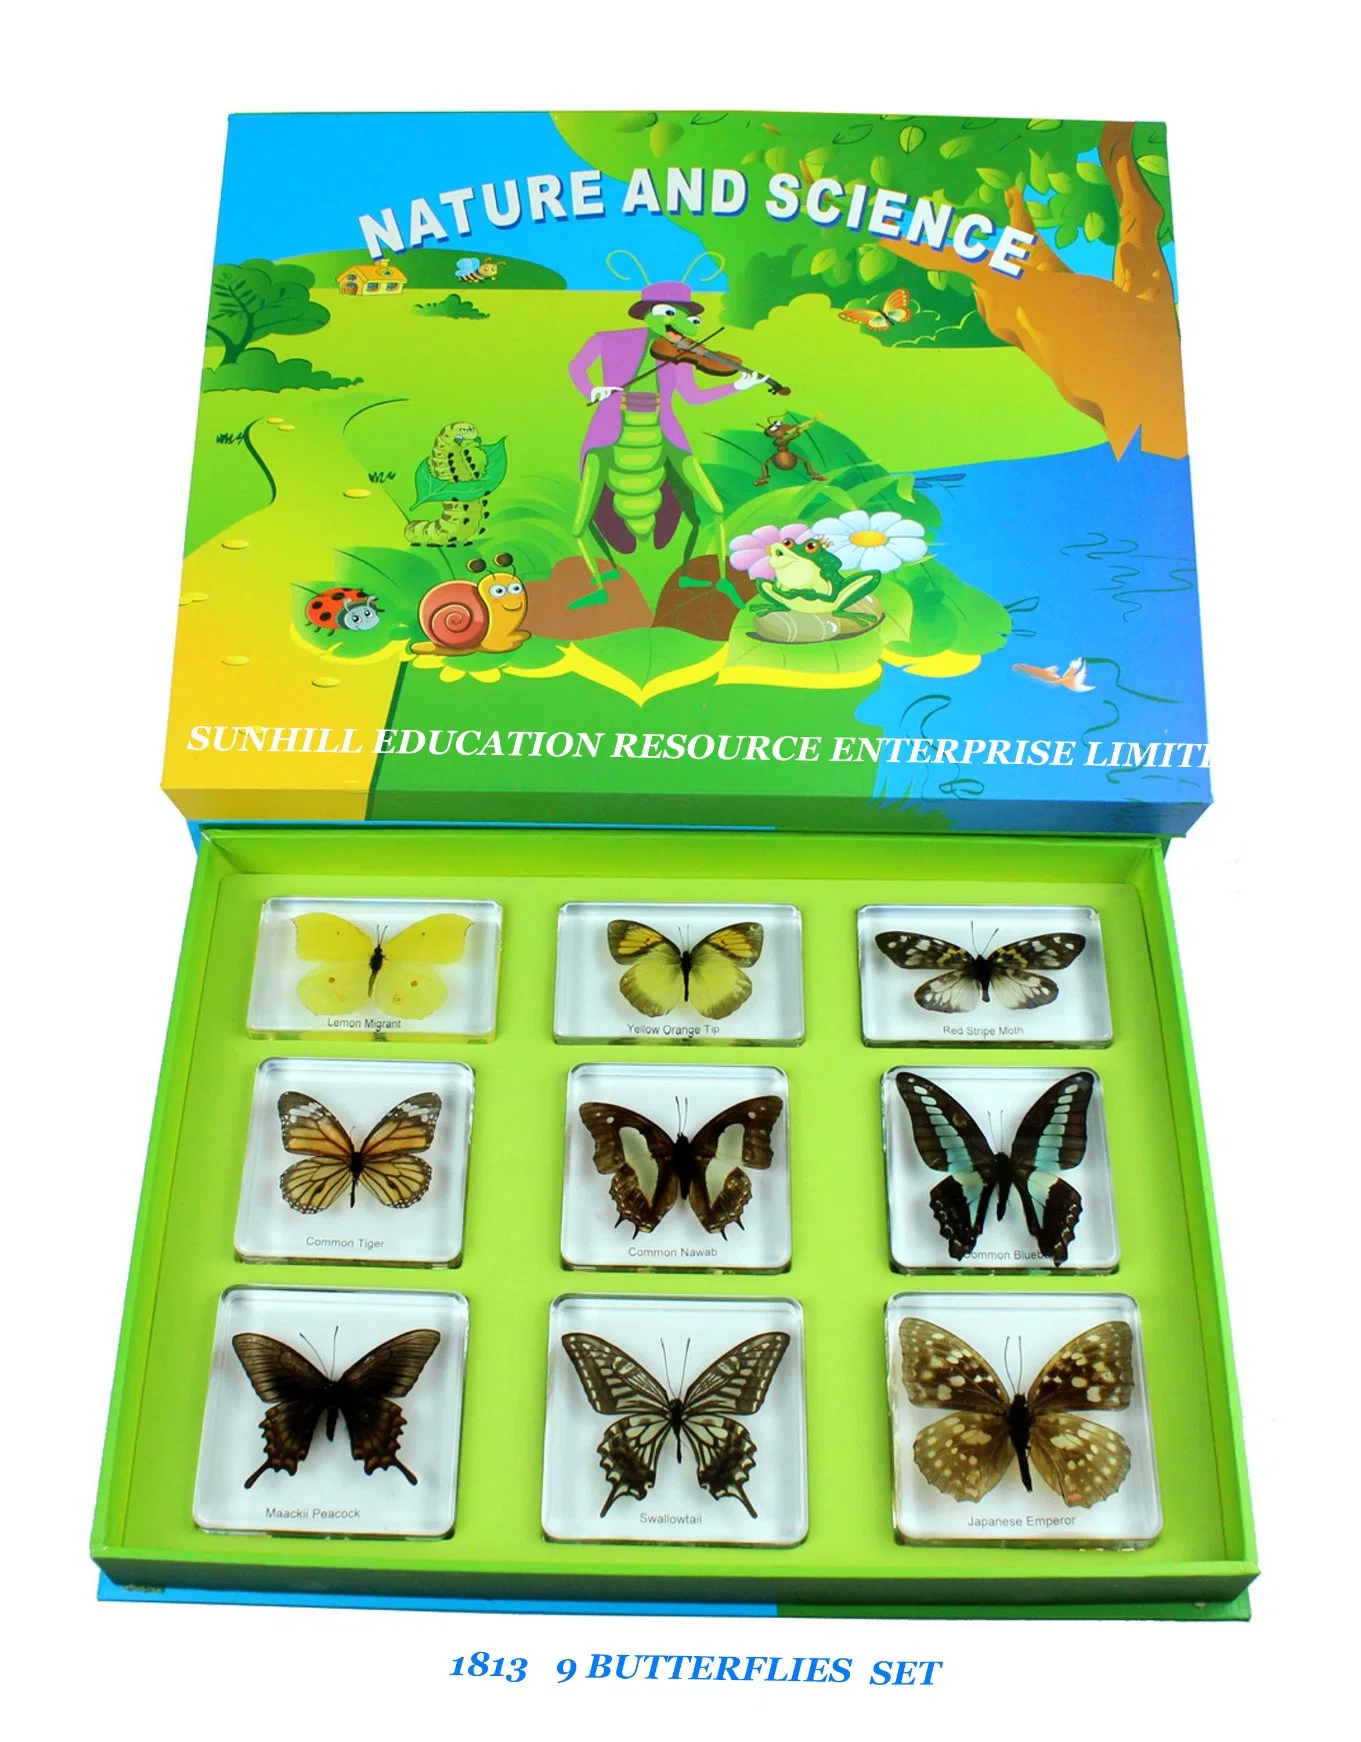 Children Toy, Nursery School Educational Science Learning Toy, Kids Classroom Teaching Specimen for Kindergarten and Preschool--Butterfly Set